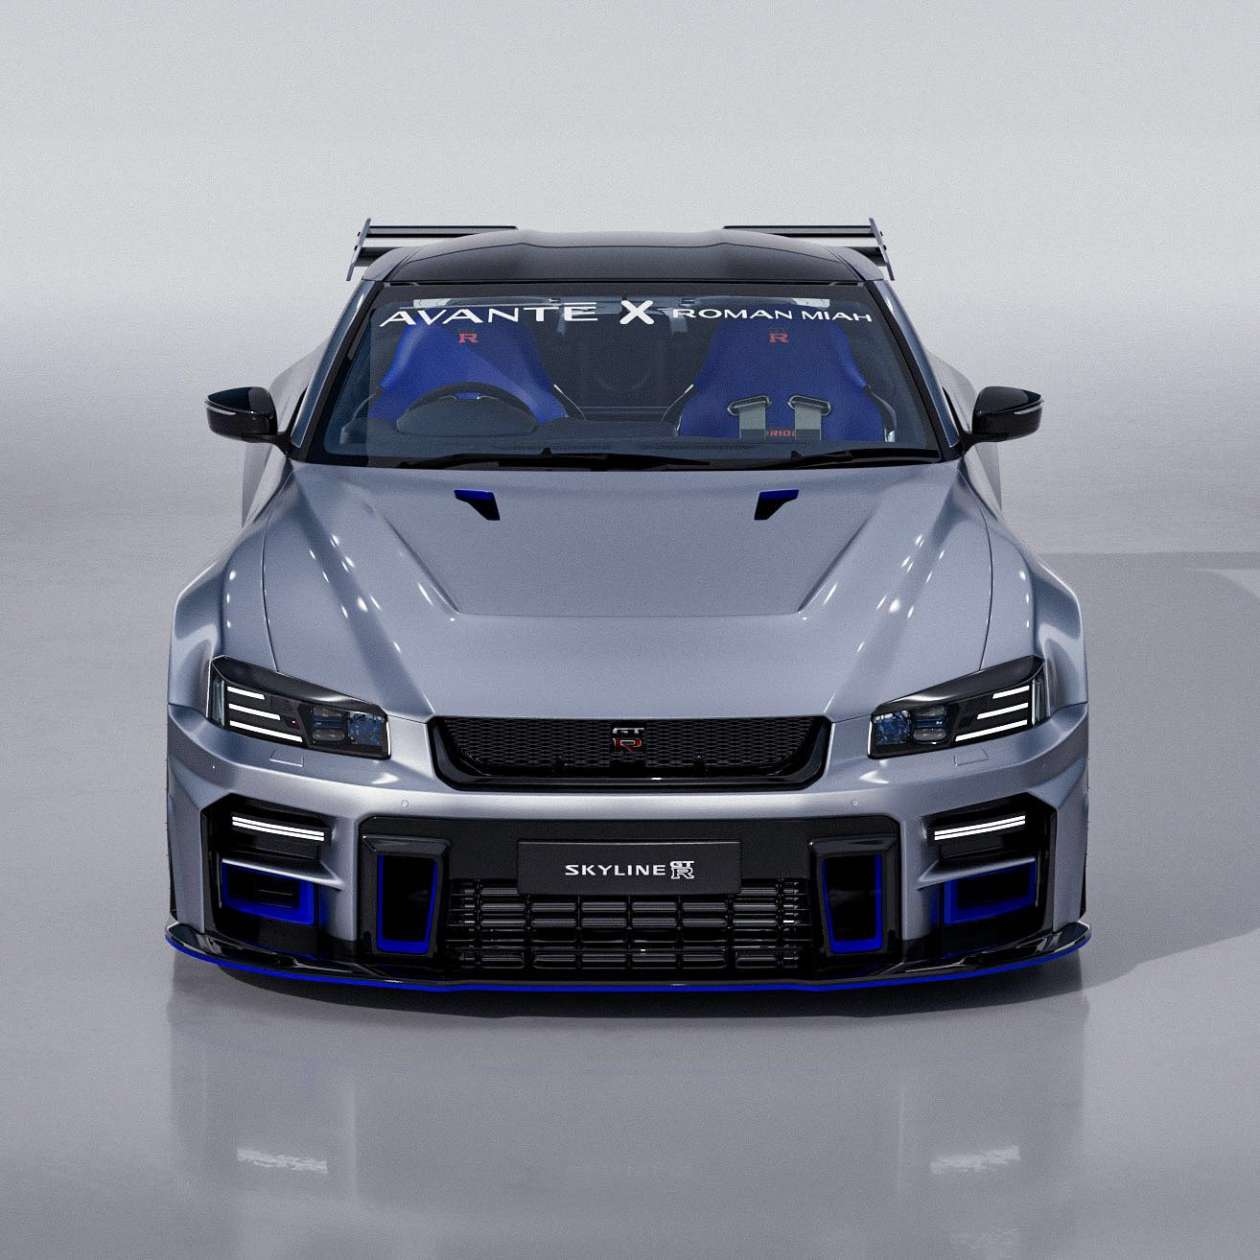 R36 Nissan Skyline GTR design concept by Roman Miah and Avante Design